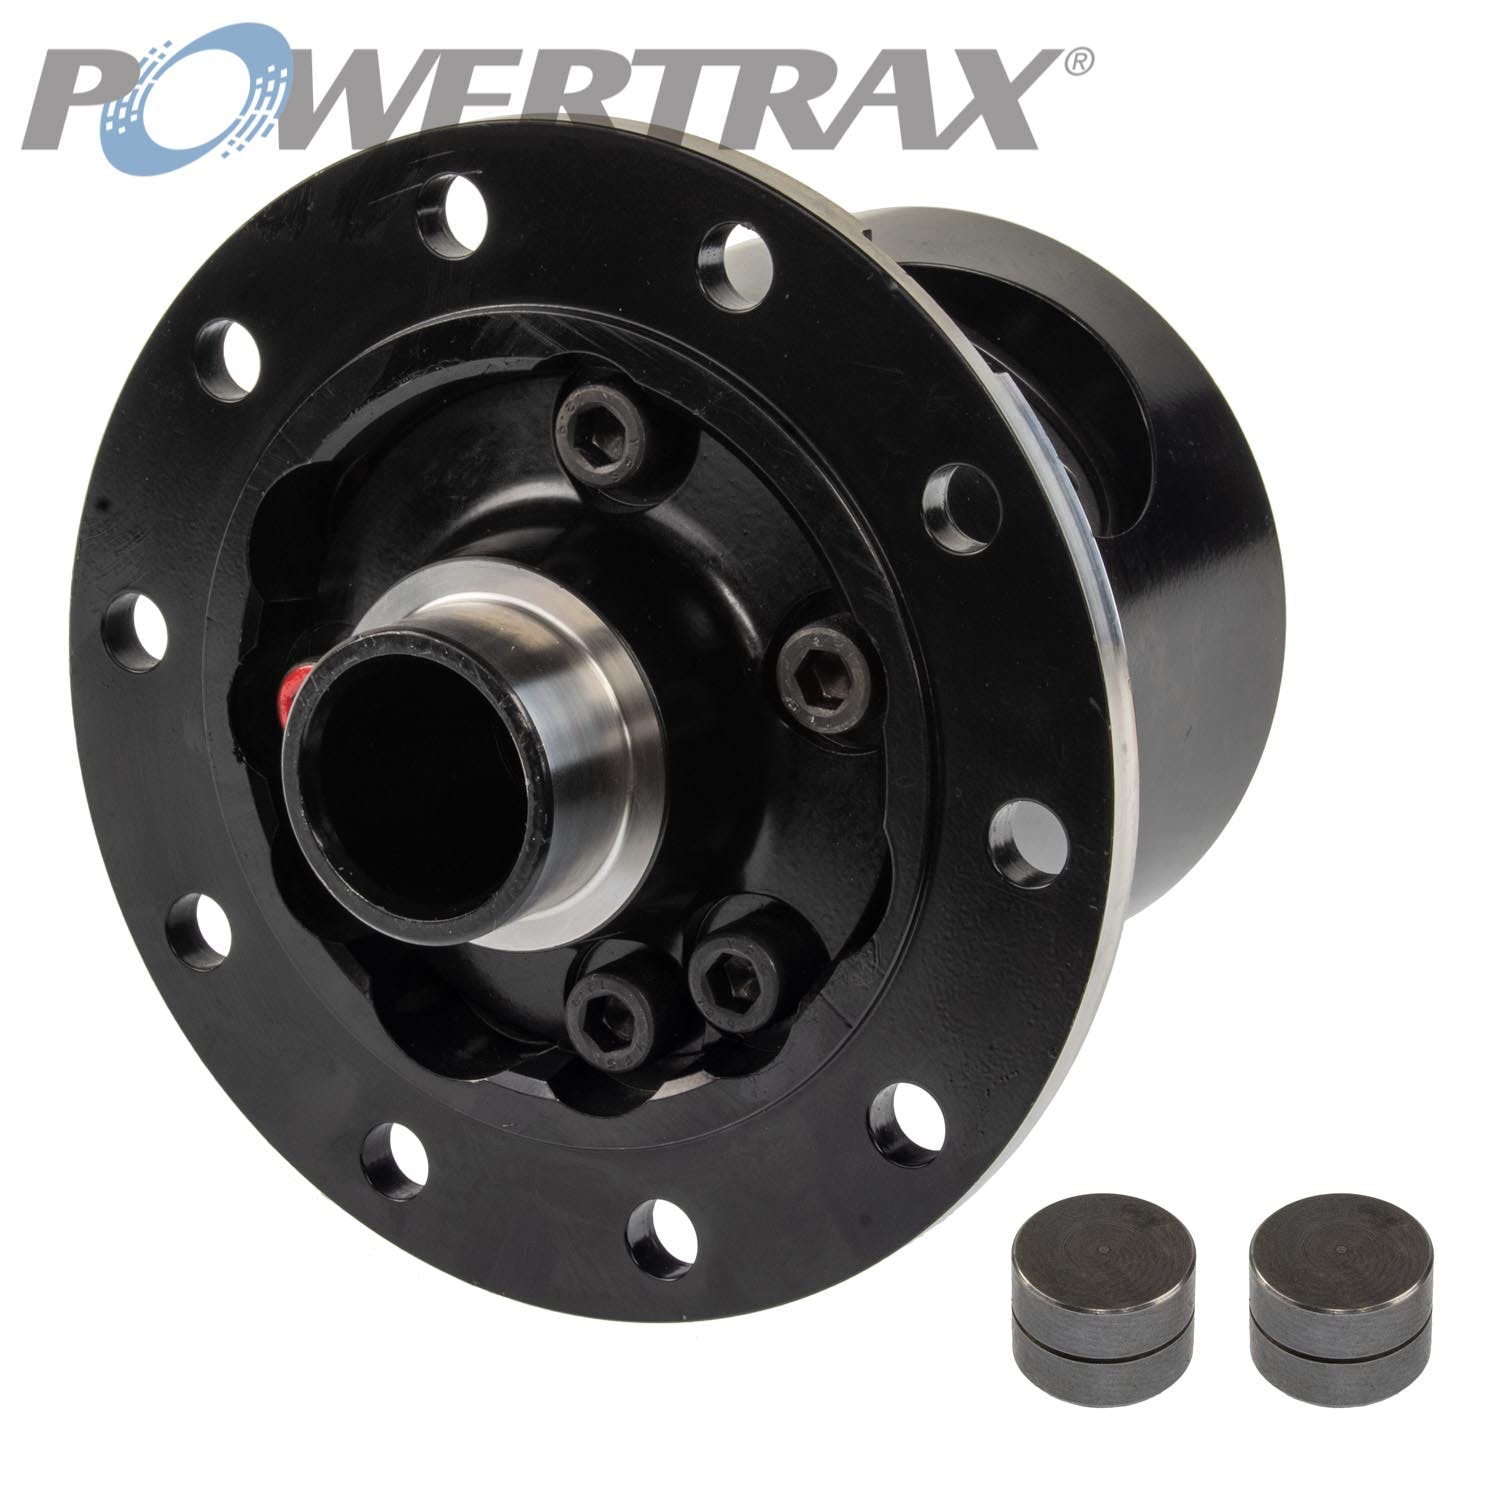 PowerTrax GT247528 Powertrax - Grip PRO Traction System